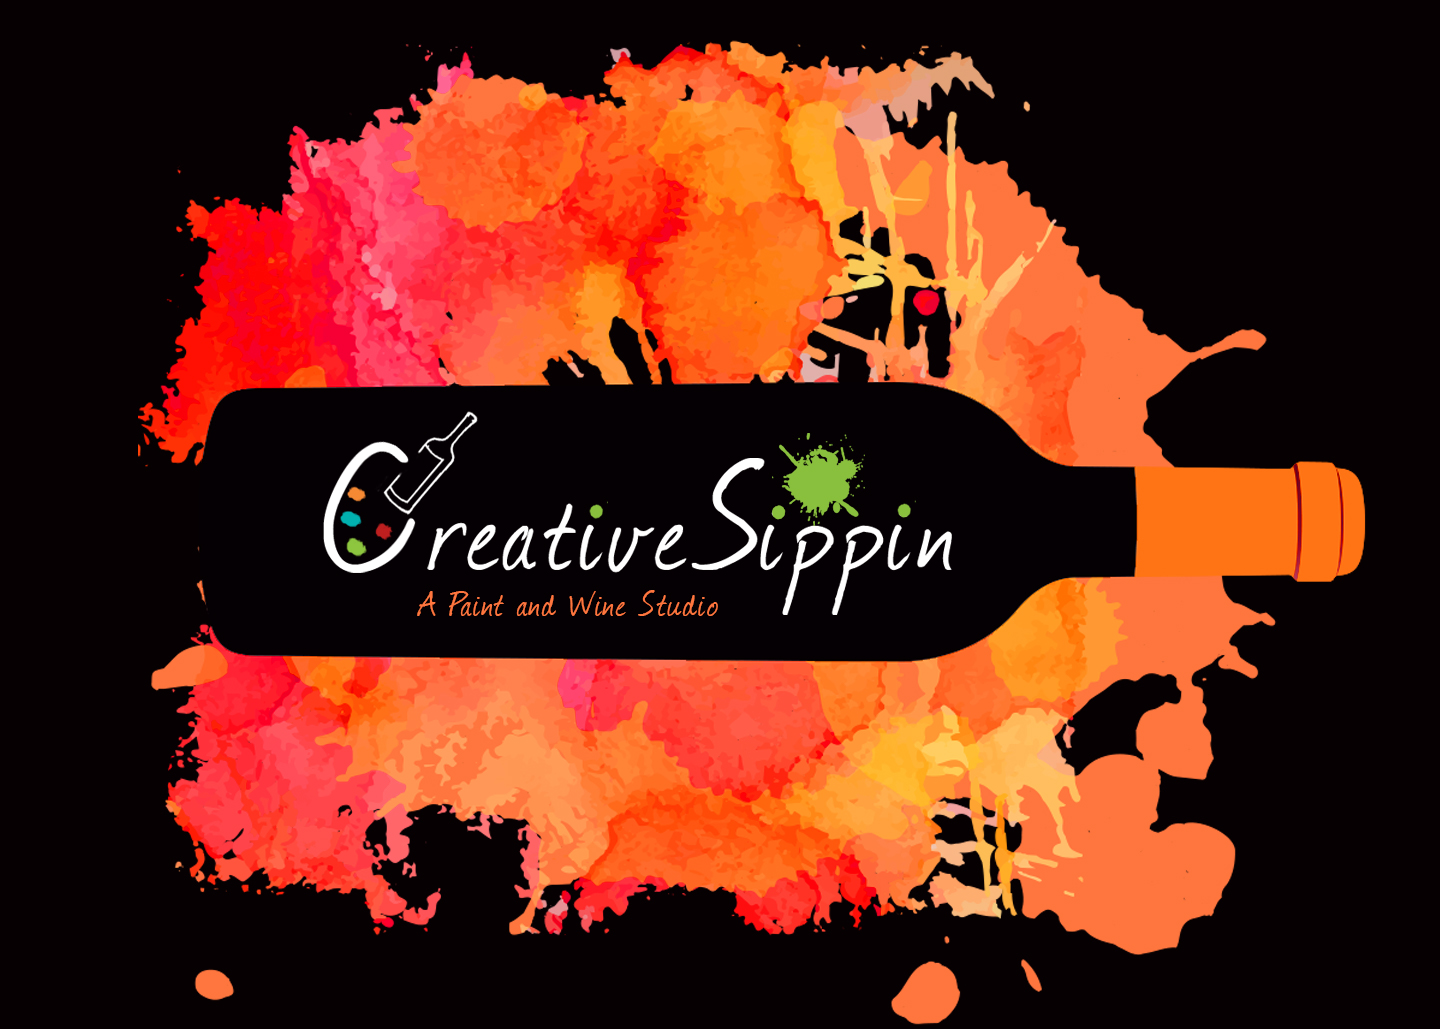 Creative Sippin